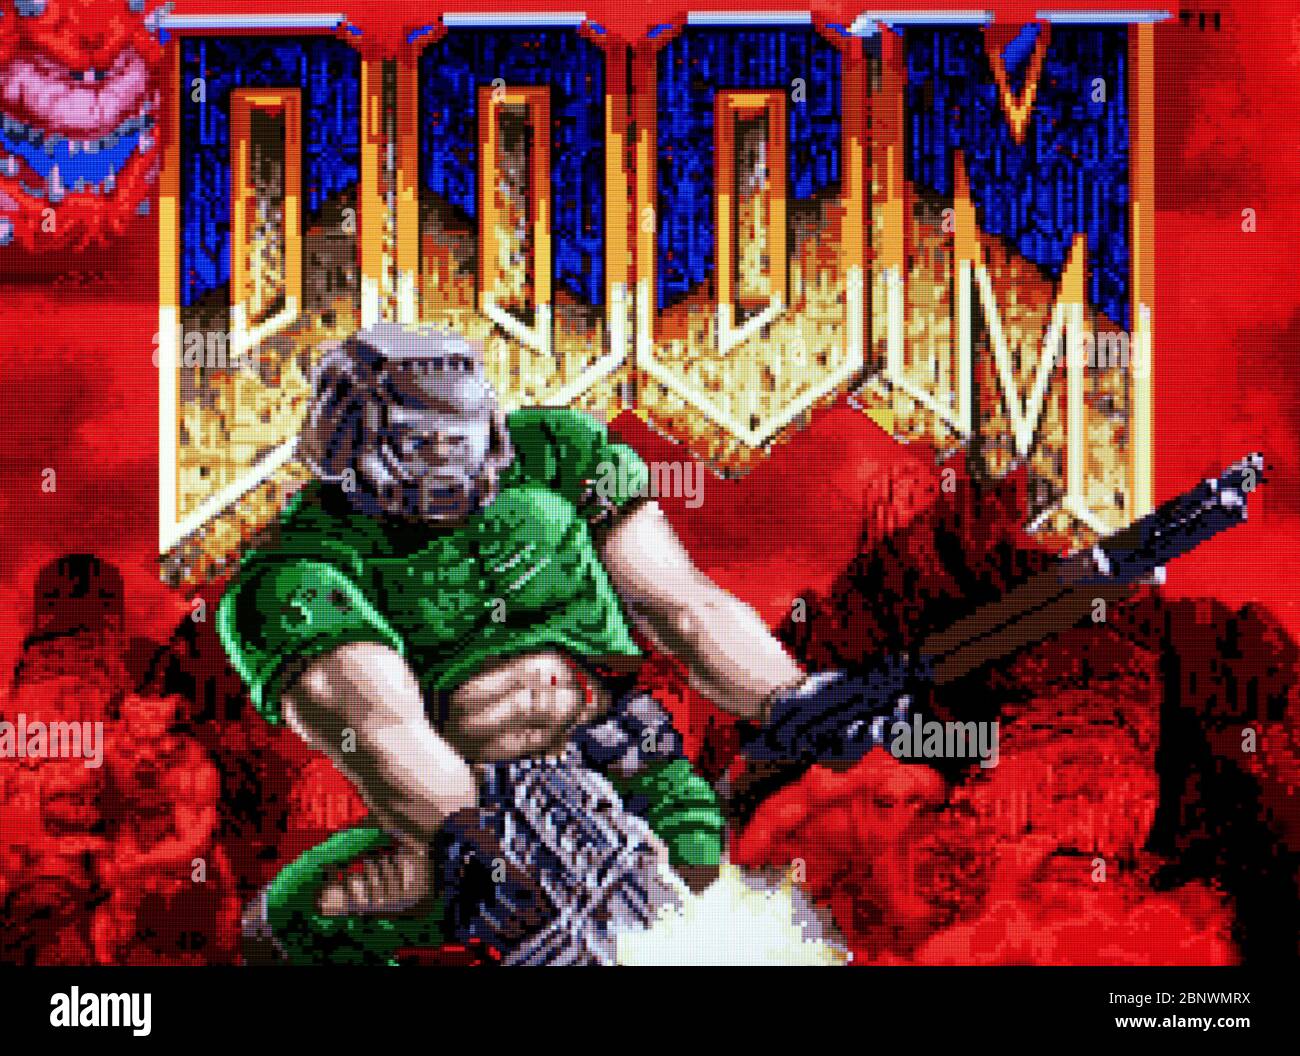 Doom, Super Nintendo